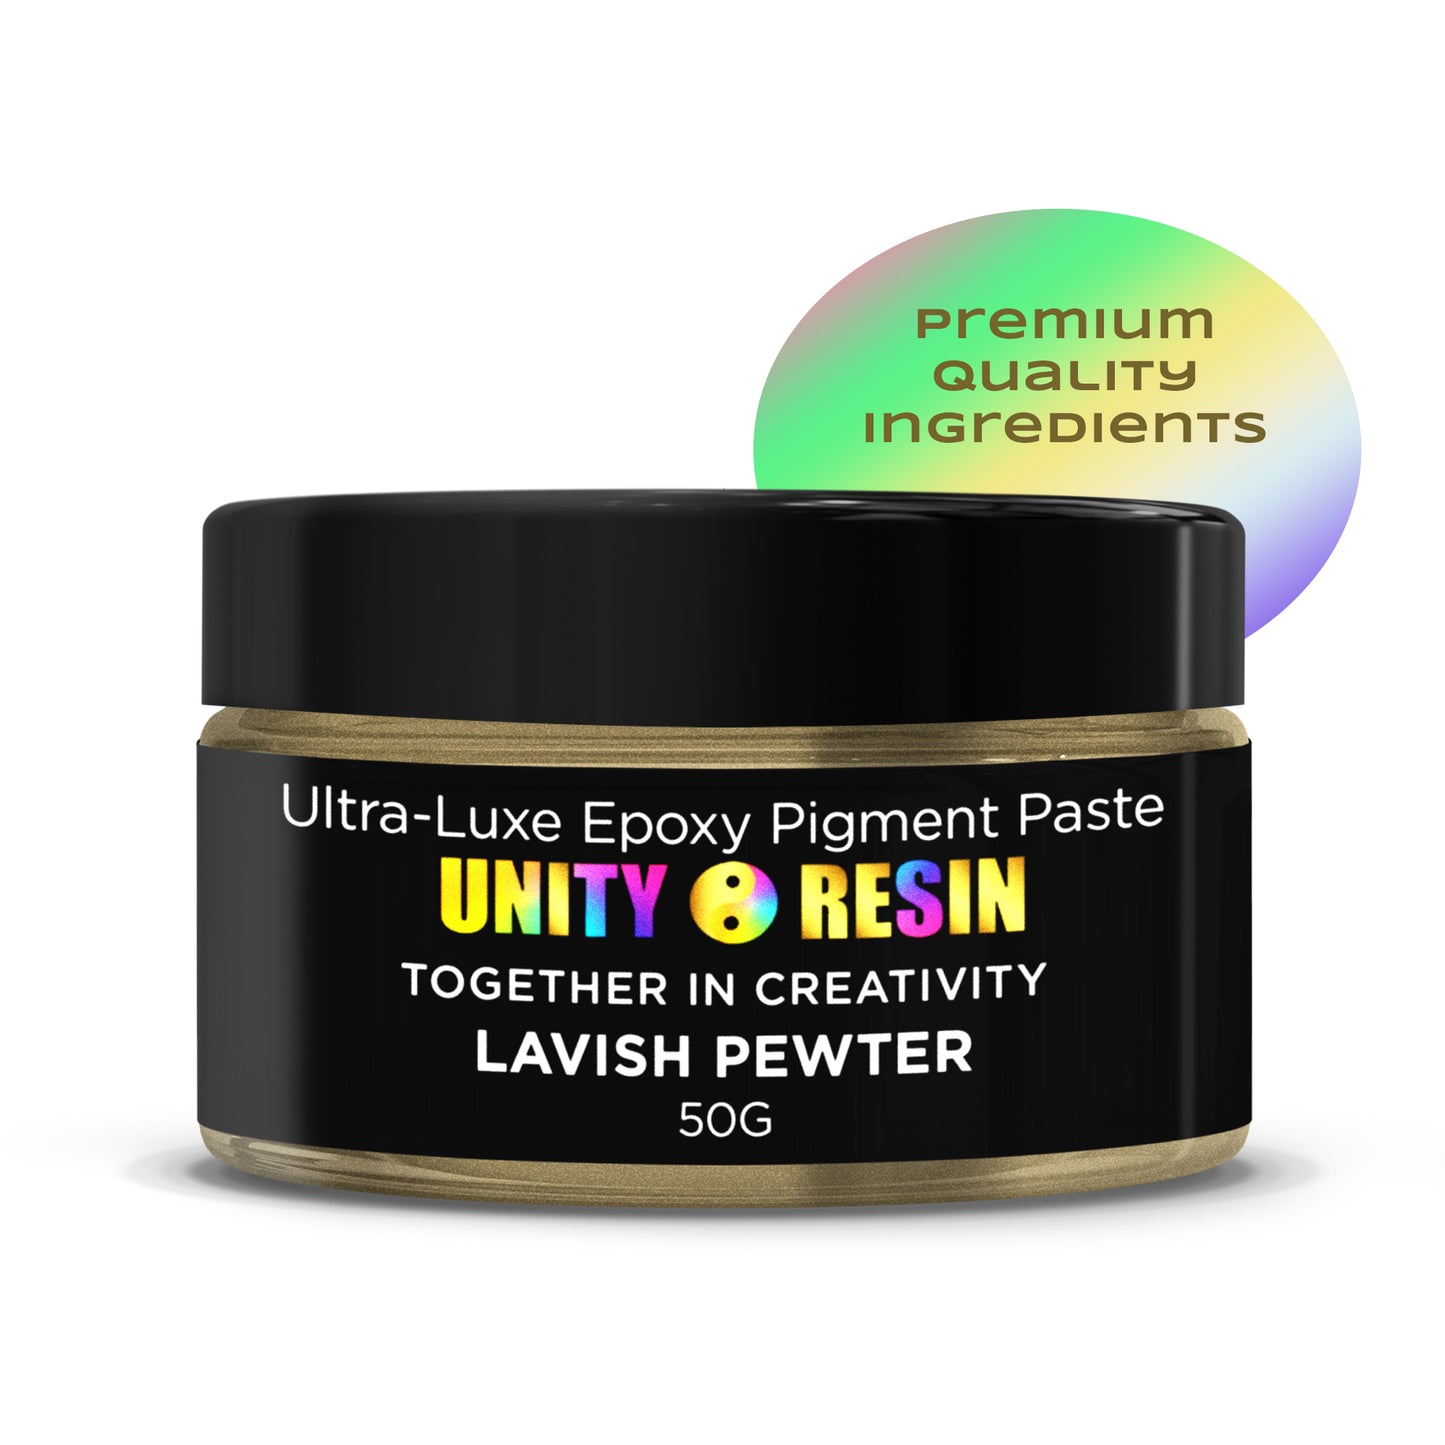 NEW Ultra-Luxe Epoxy Resin Pigment Paste- LAVISH PEWTER (50G)